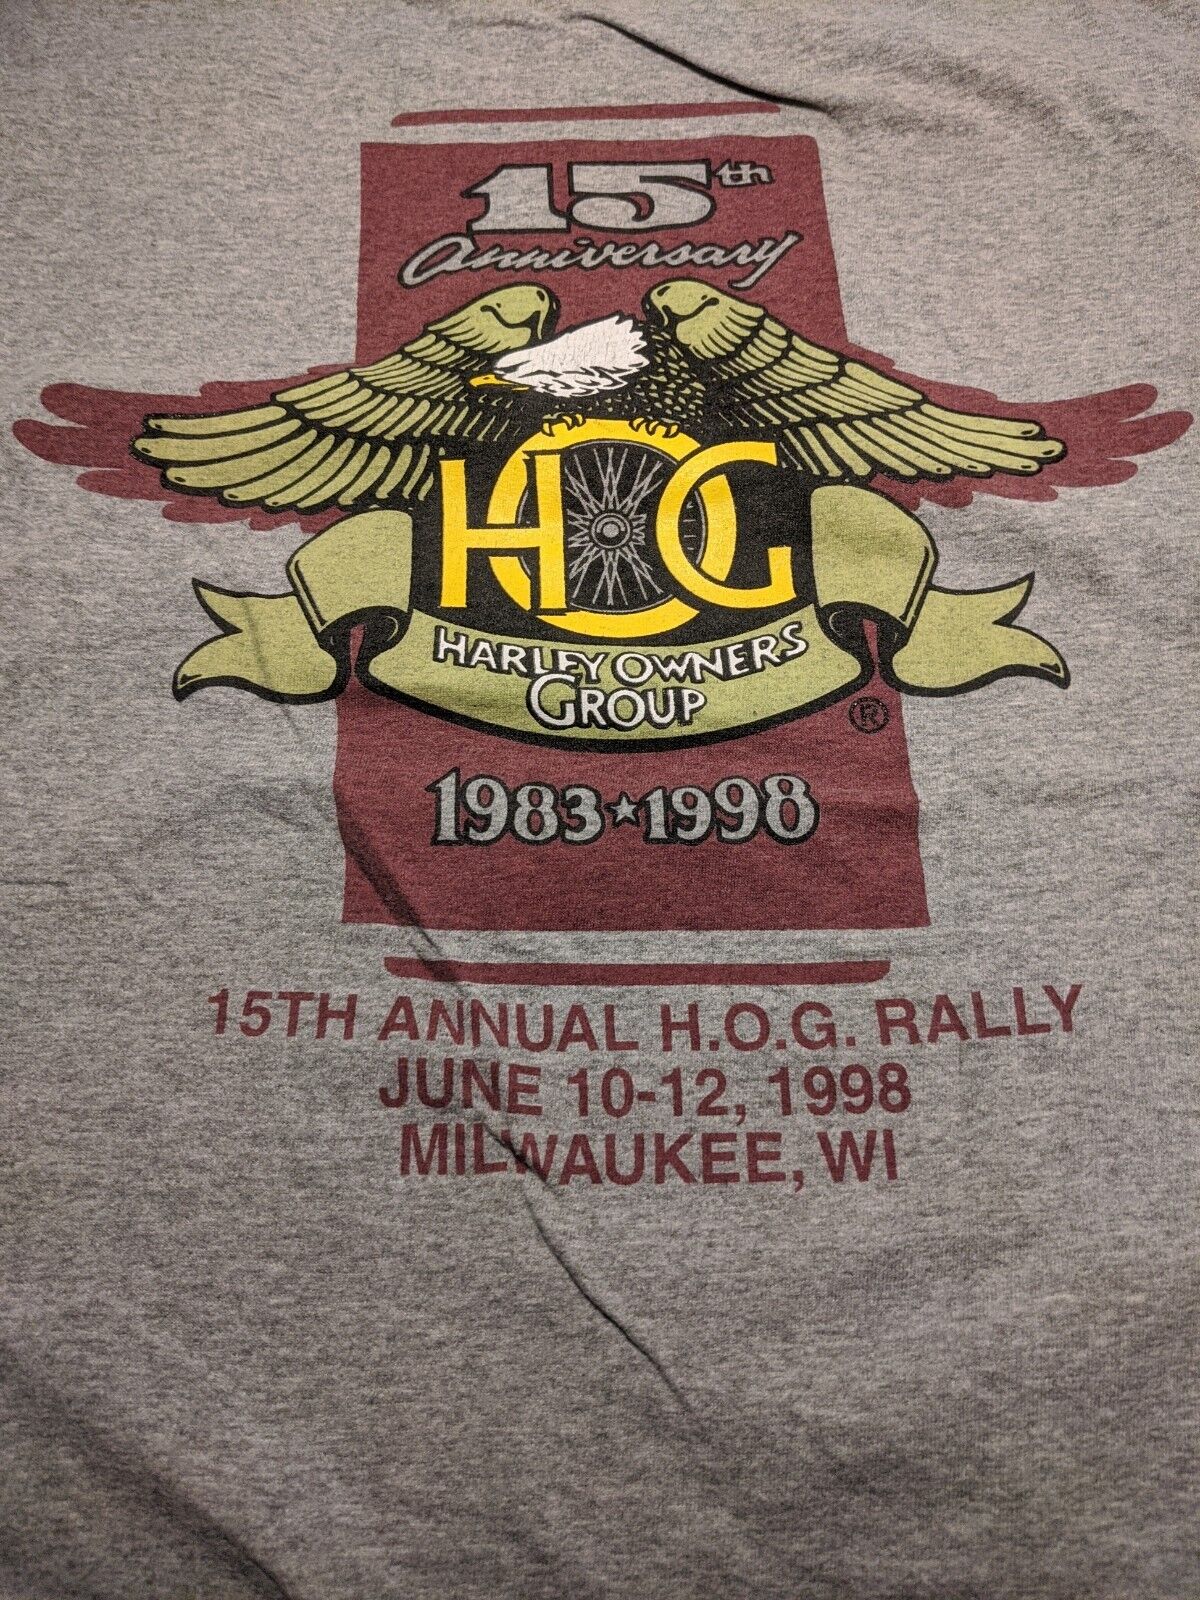 1998 MILWAUKEE WISCONSIN HOG RALLY HARLEY-DAVIDSON HOG OWNERS GROUP T-SHIRT MOTO